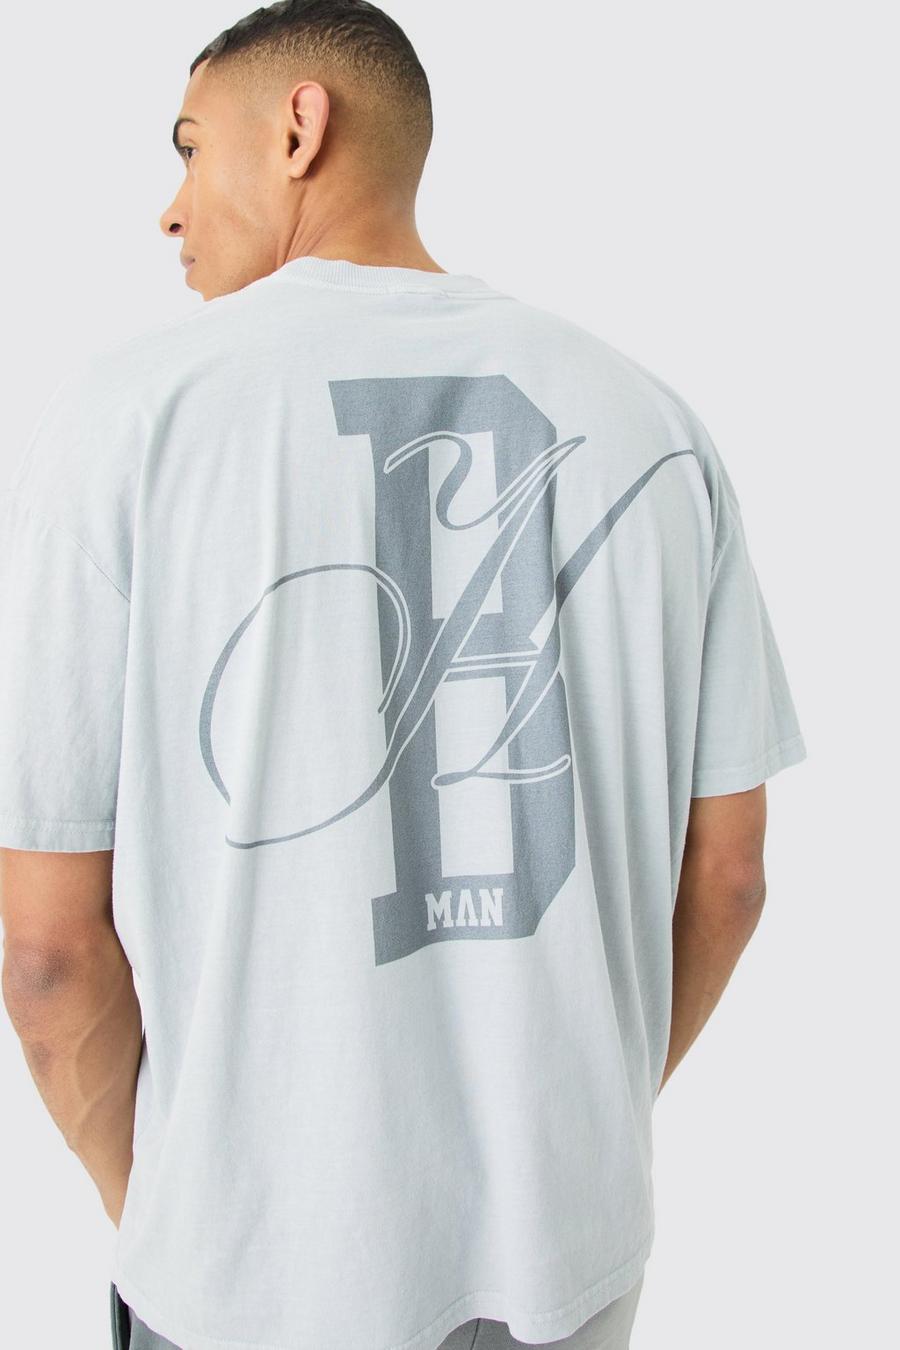 Oversize T-Shirt mit Bh Man Print, Light grey